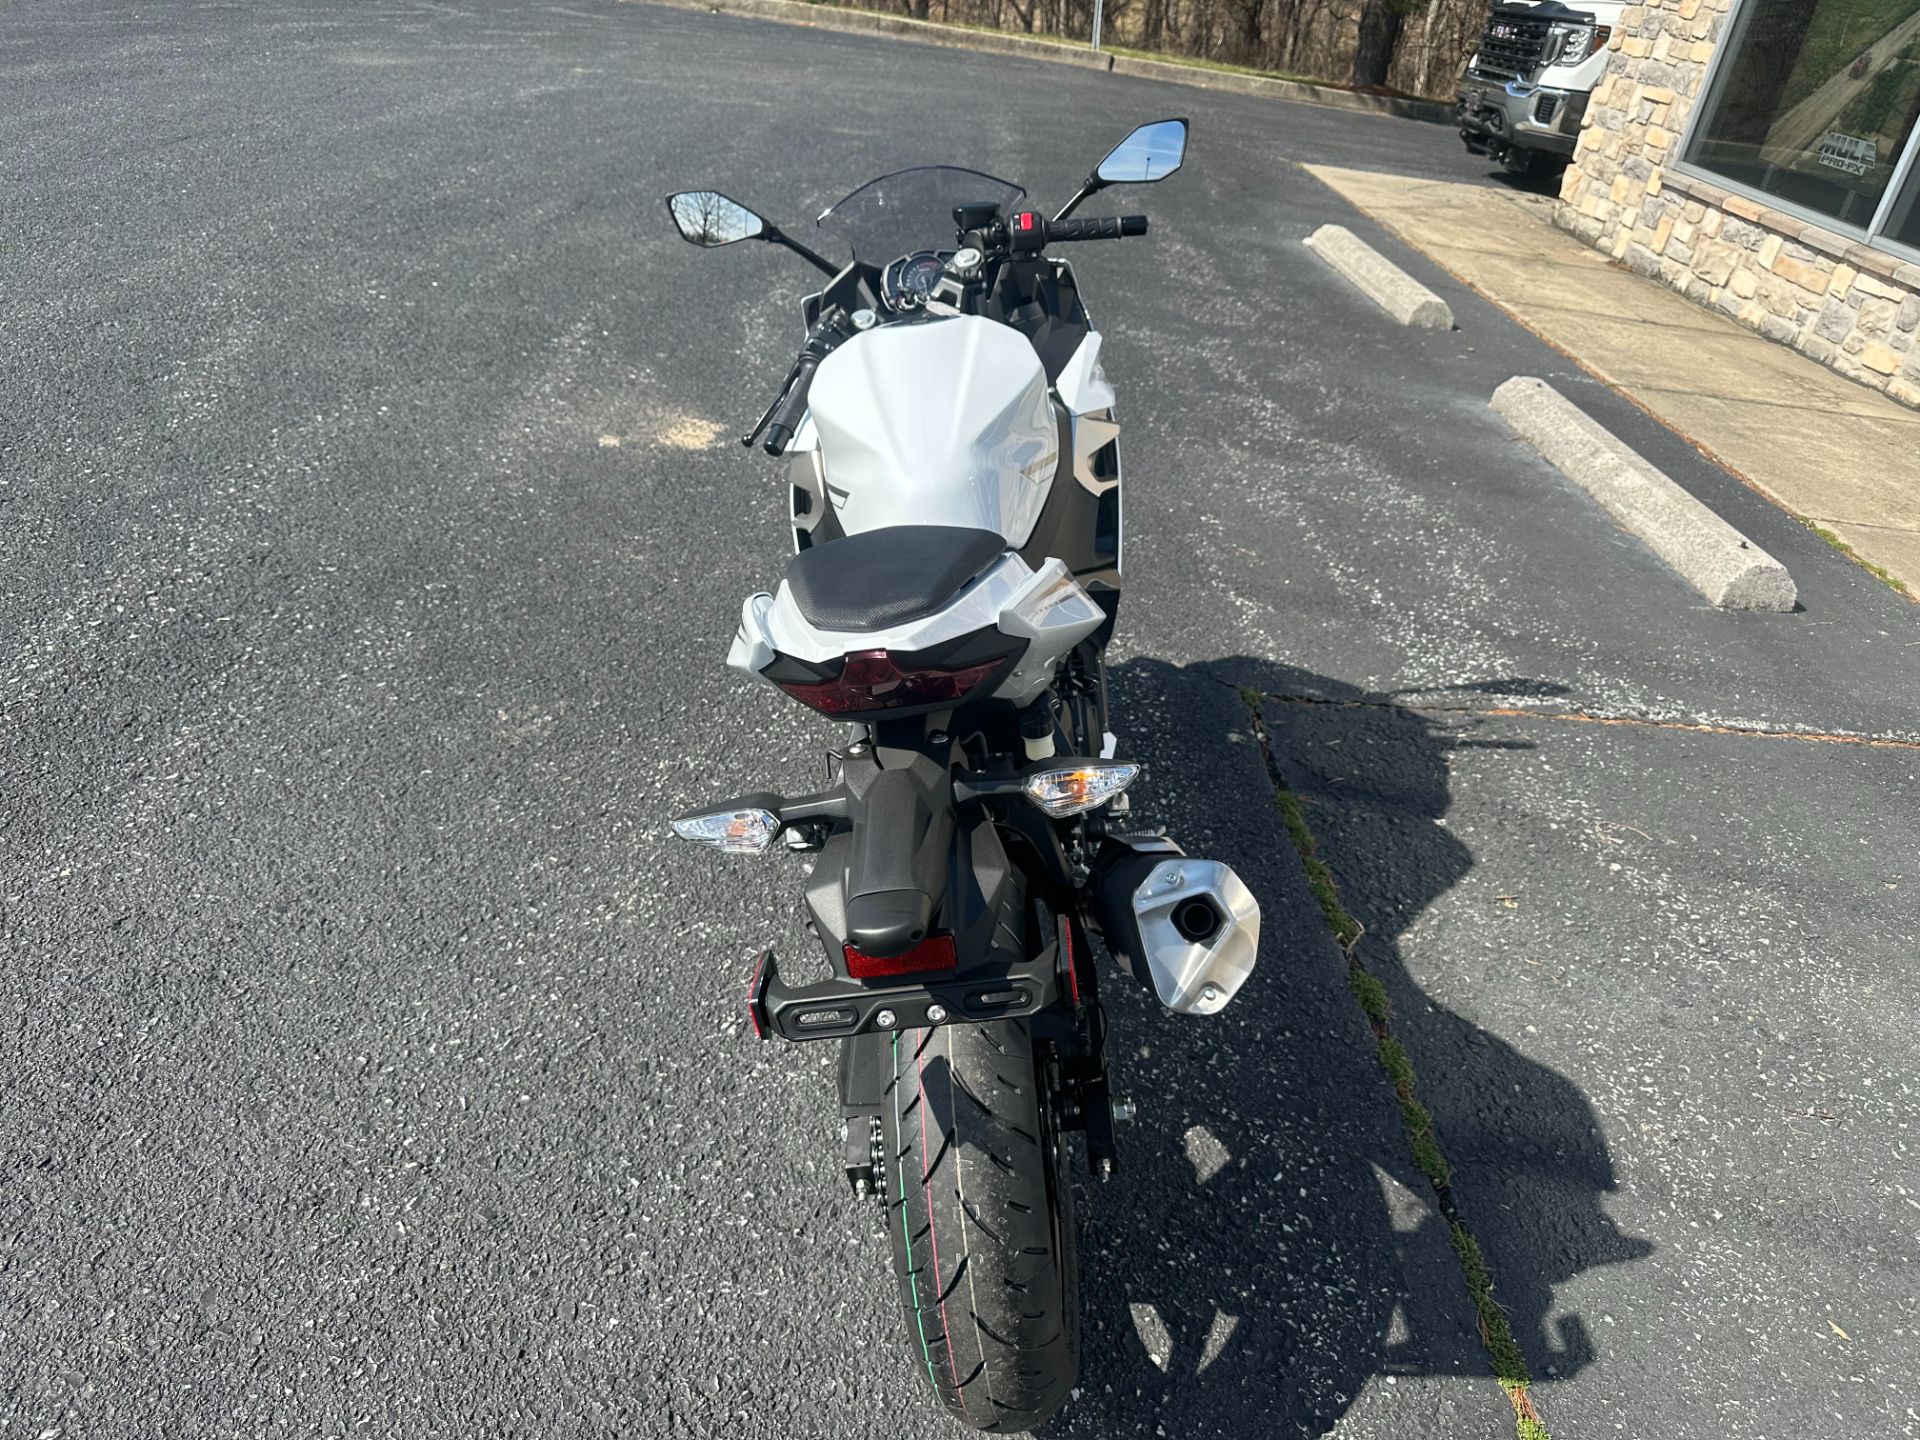 2023 Kawasaki Ninja 400 in Mechanicsburg, Pennsylvania - Photo 8